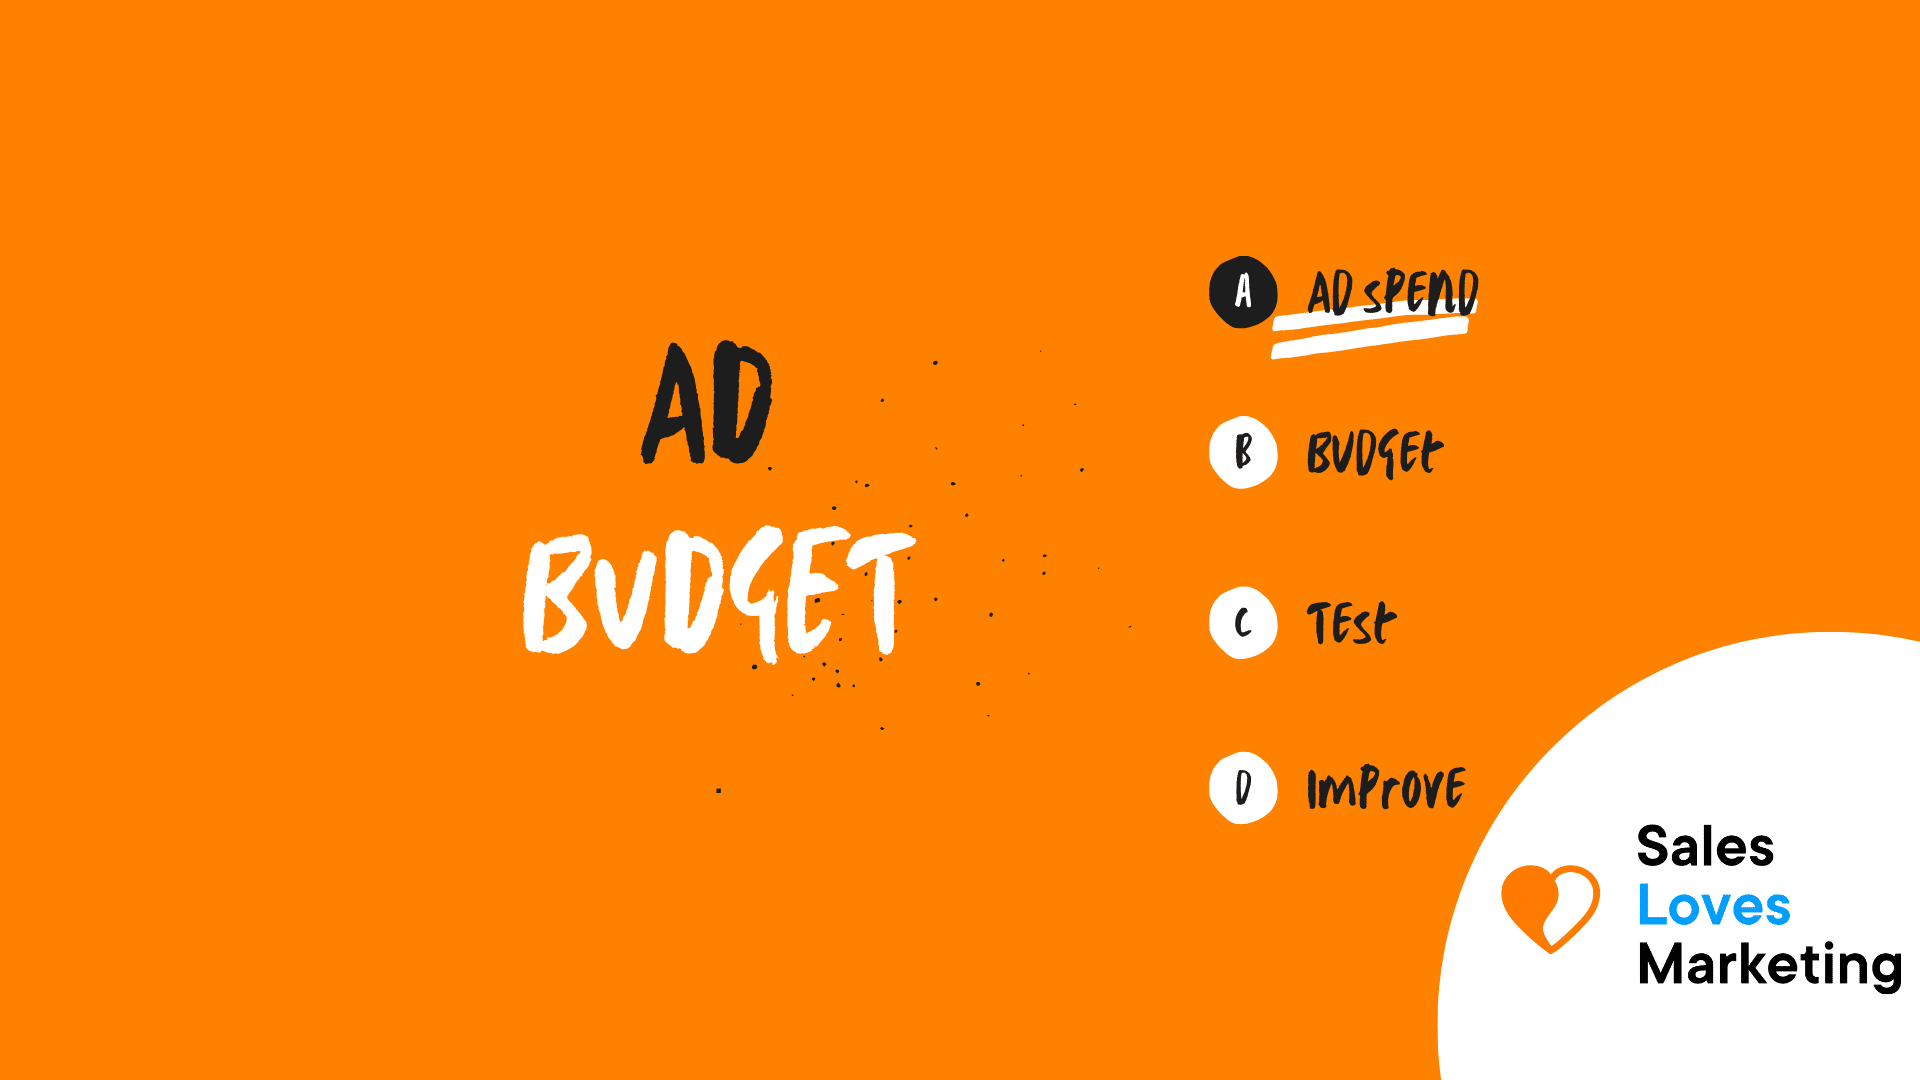 Ad budget